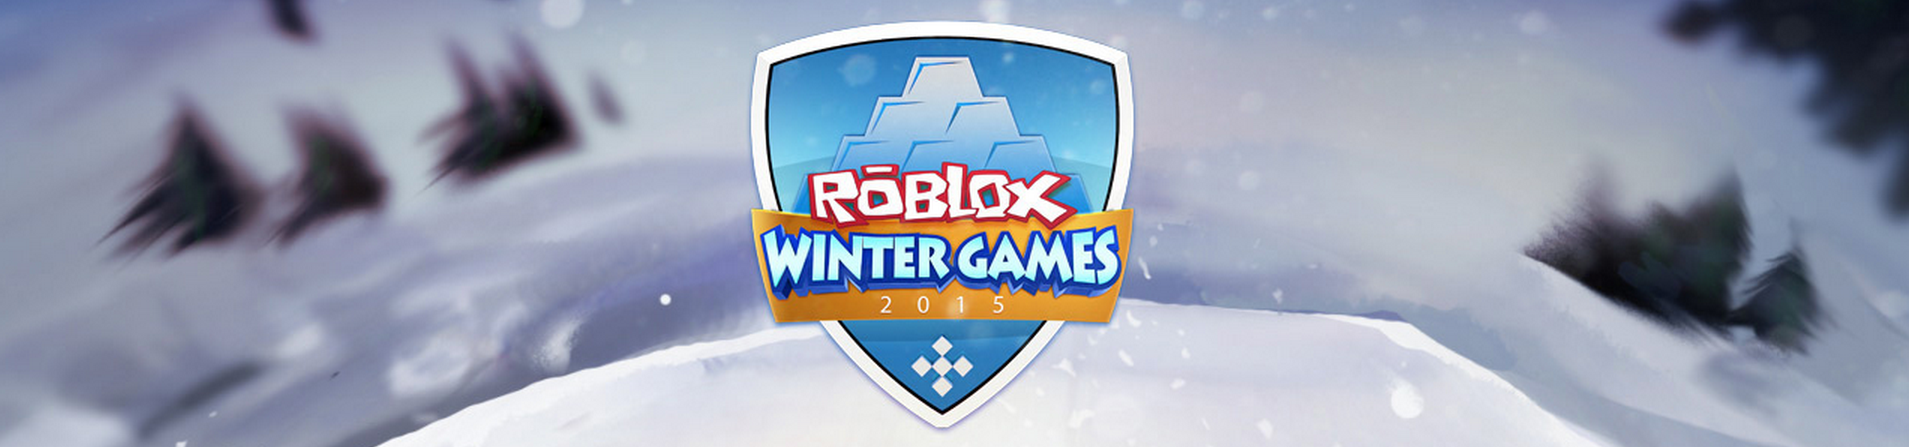 Roblox 2015 Games